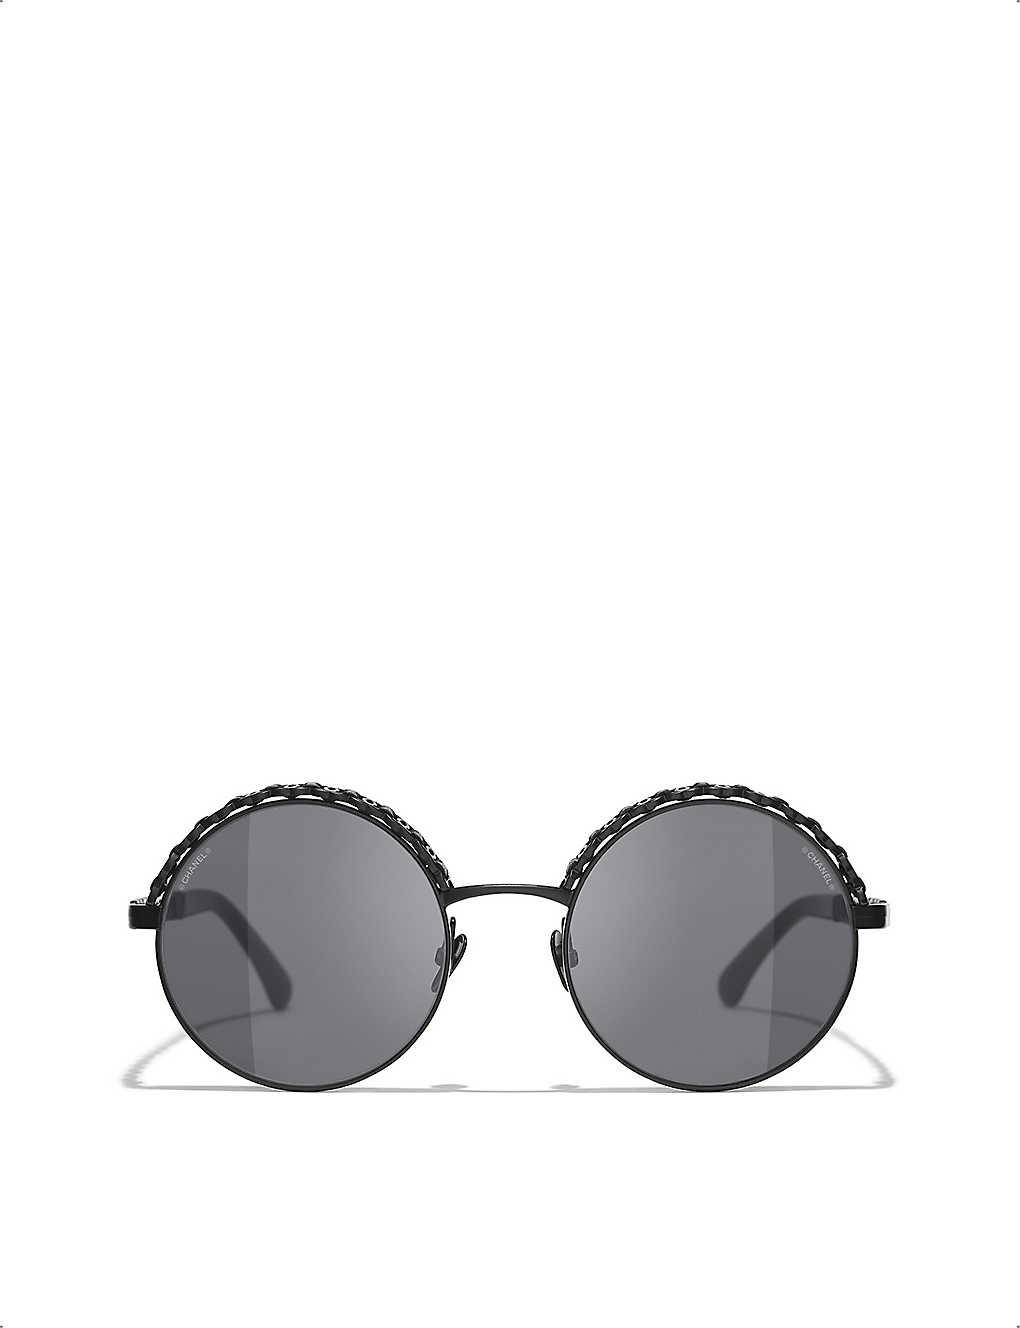 CHANEL - Round sunglasses